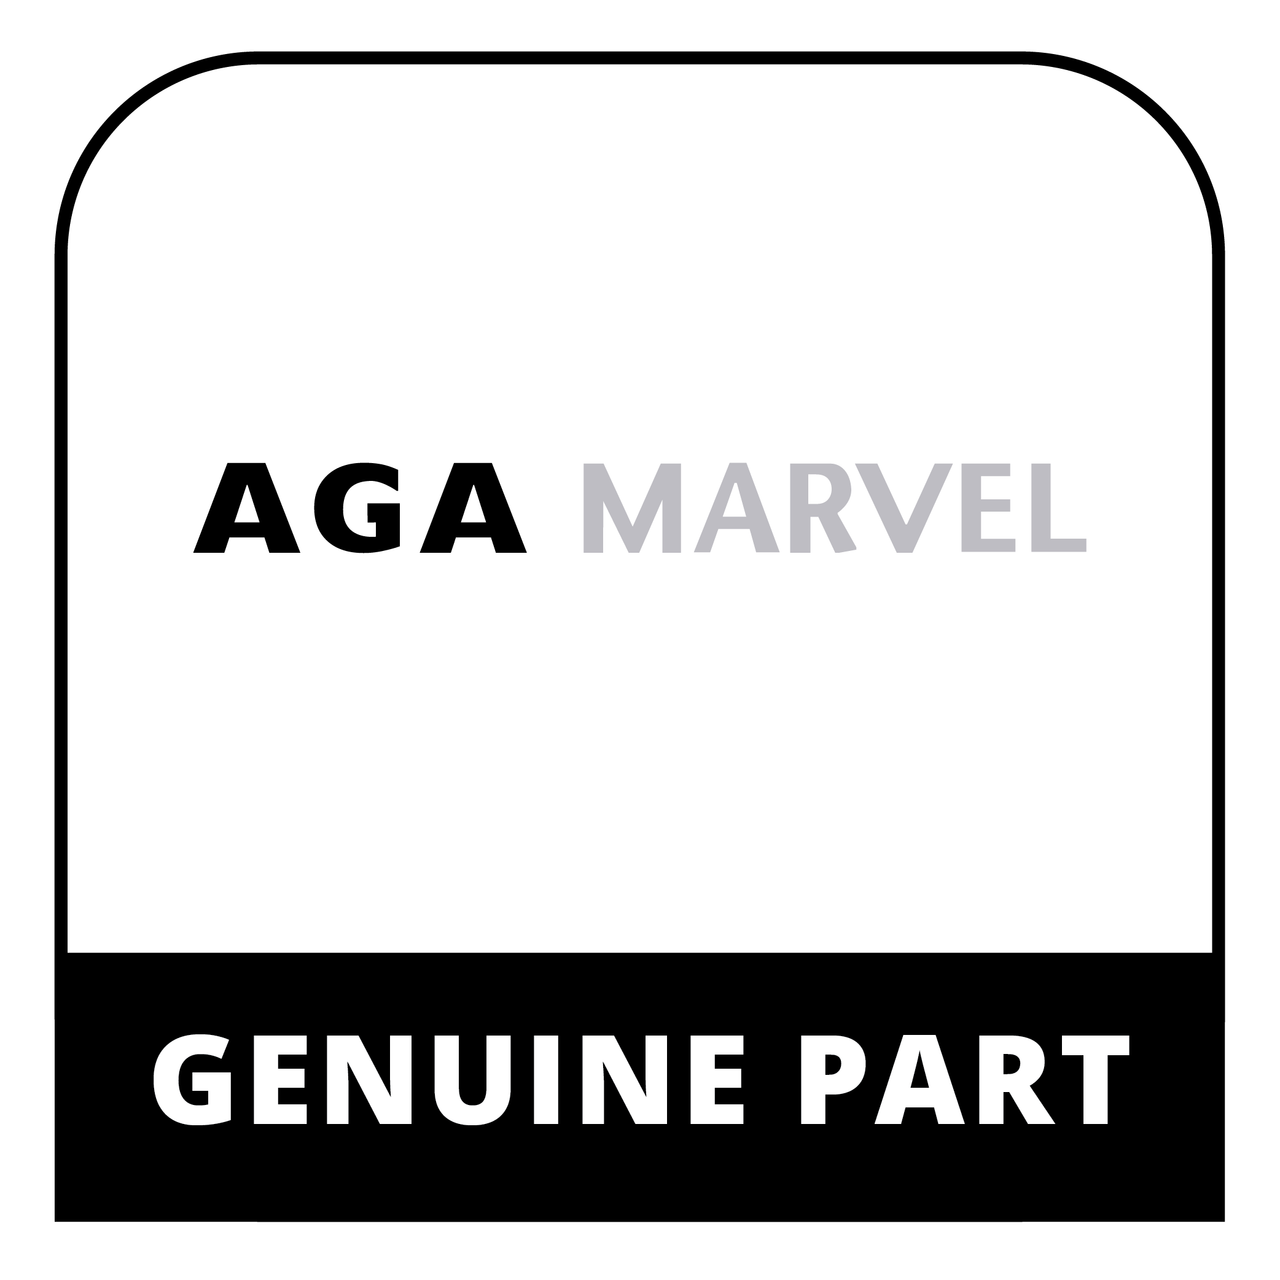 AGA Marvel G1003 - Support Blr No3-68 - Genuine AGA Marvel Part